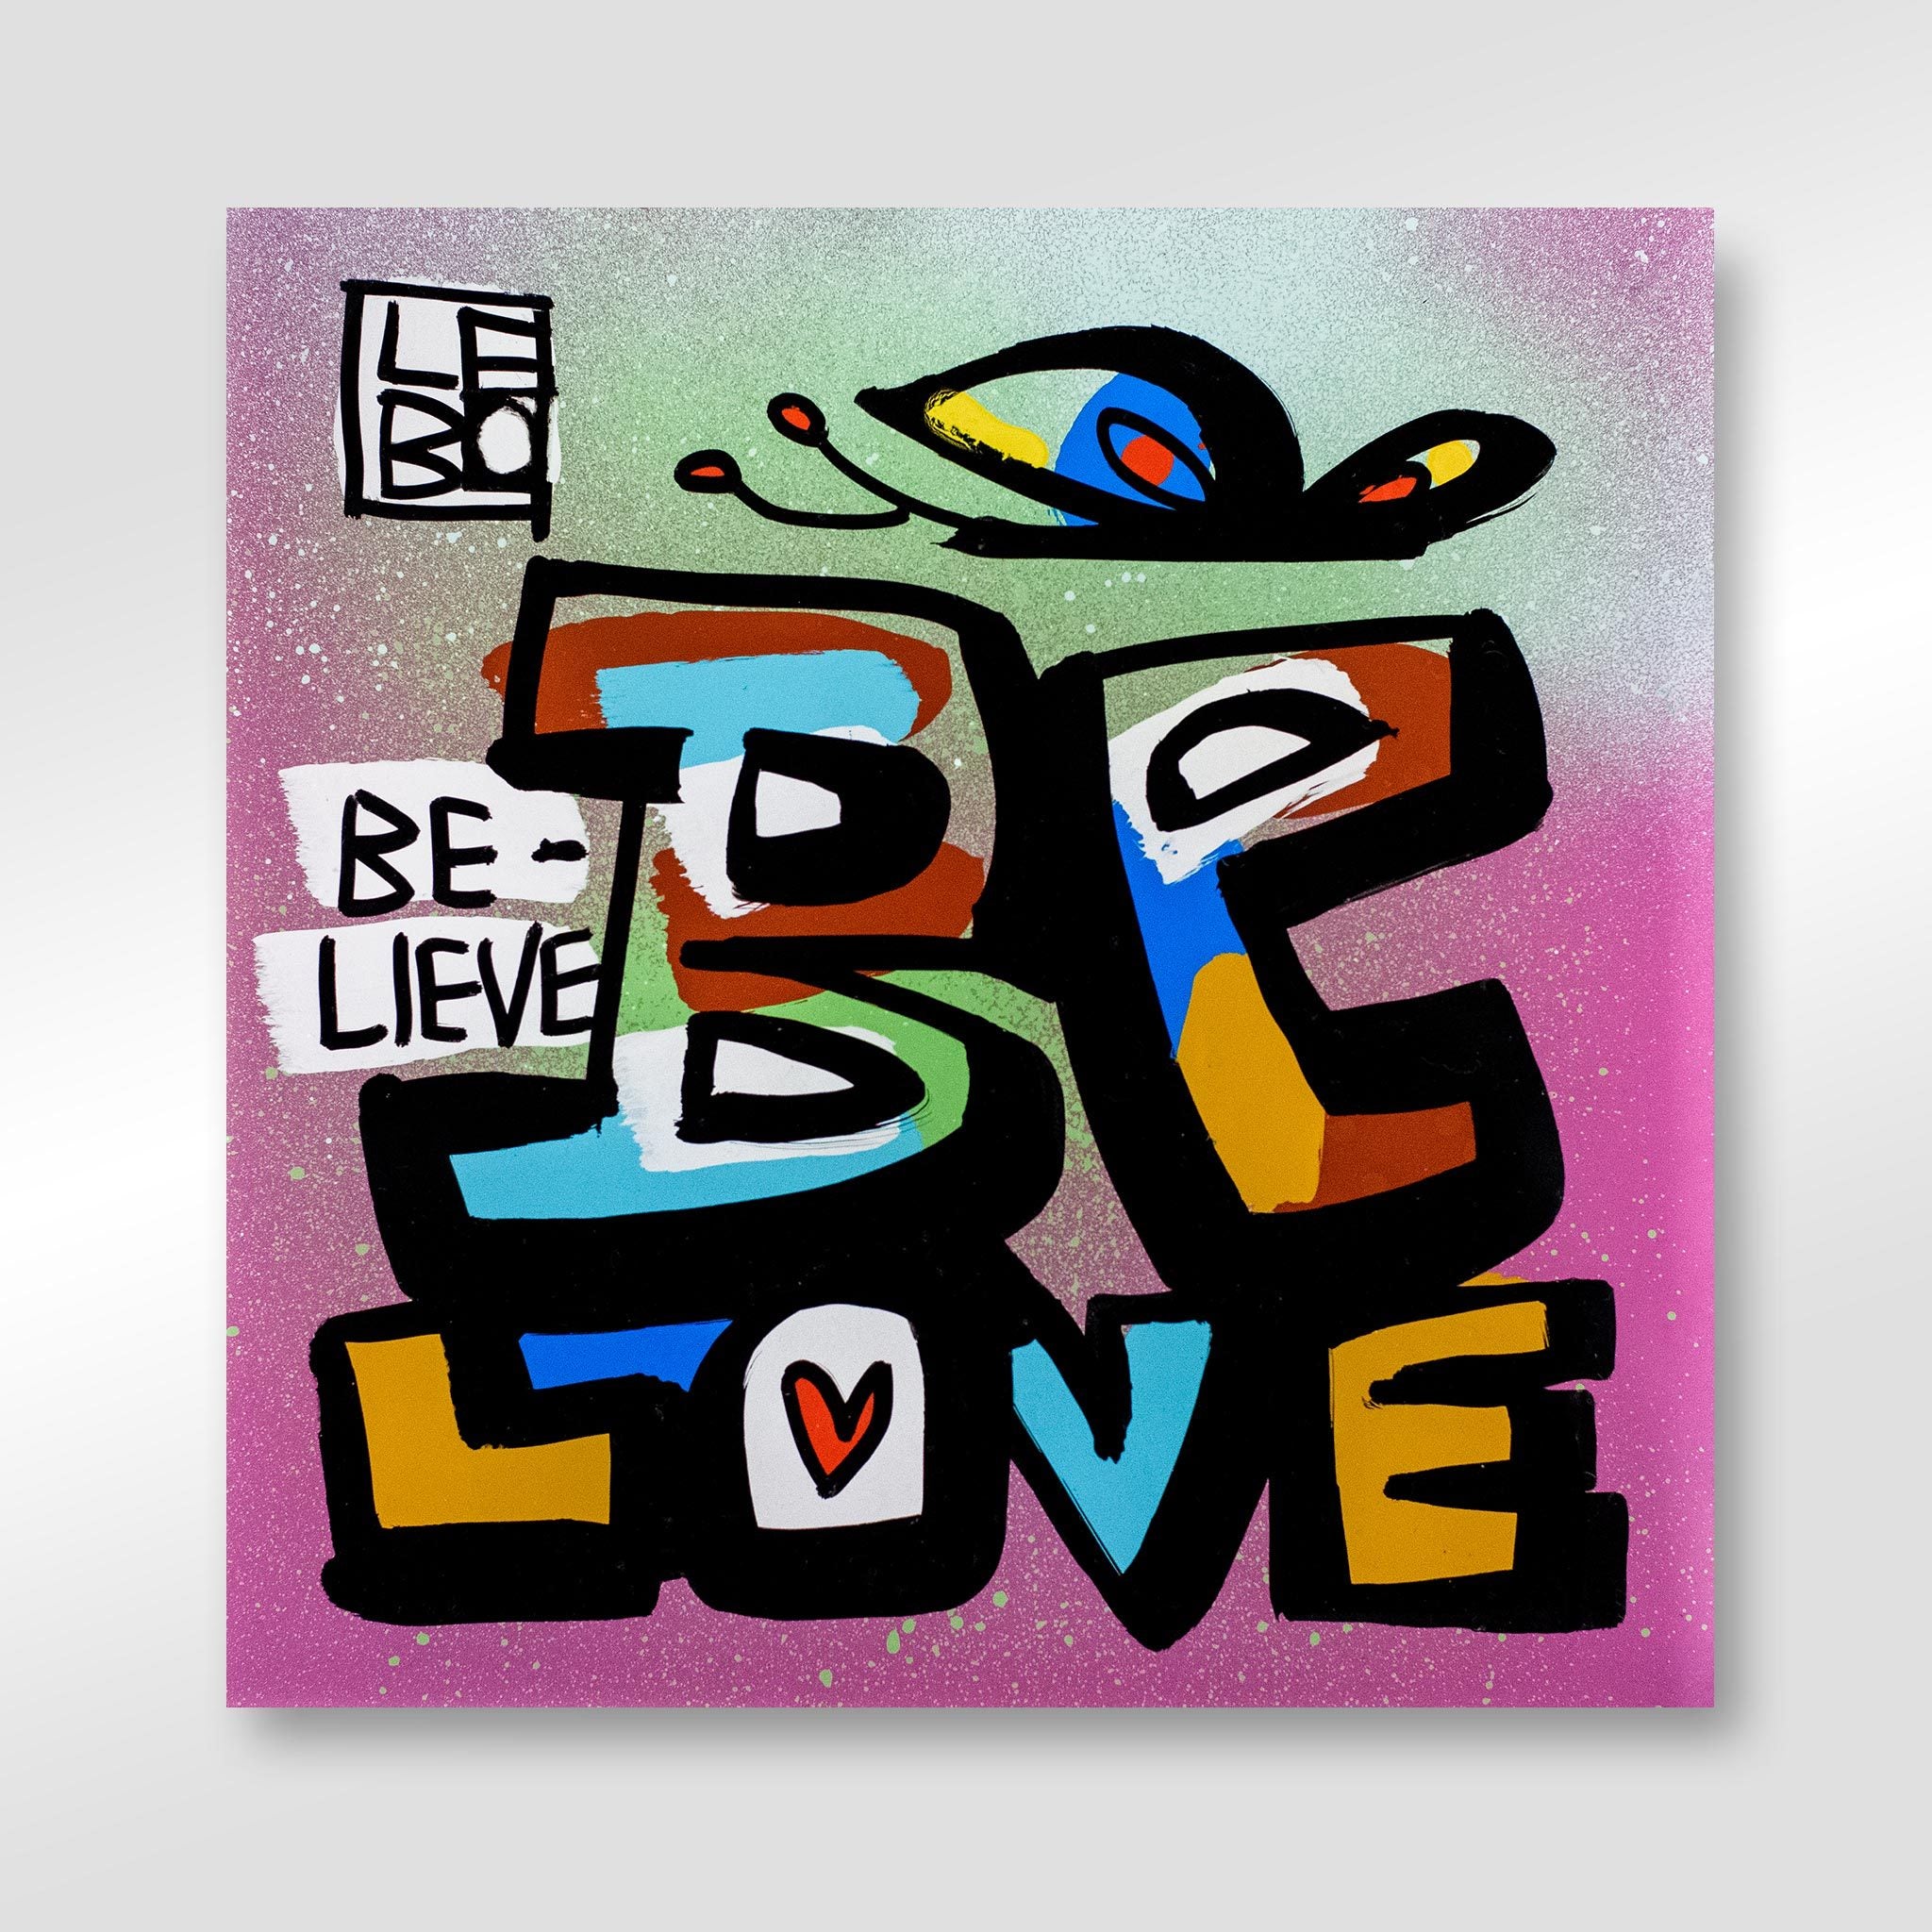 Be Love, Believe - Art Bond - shop.leboart.com